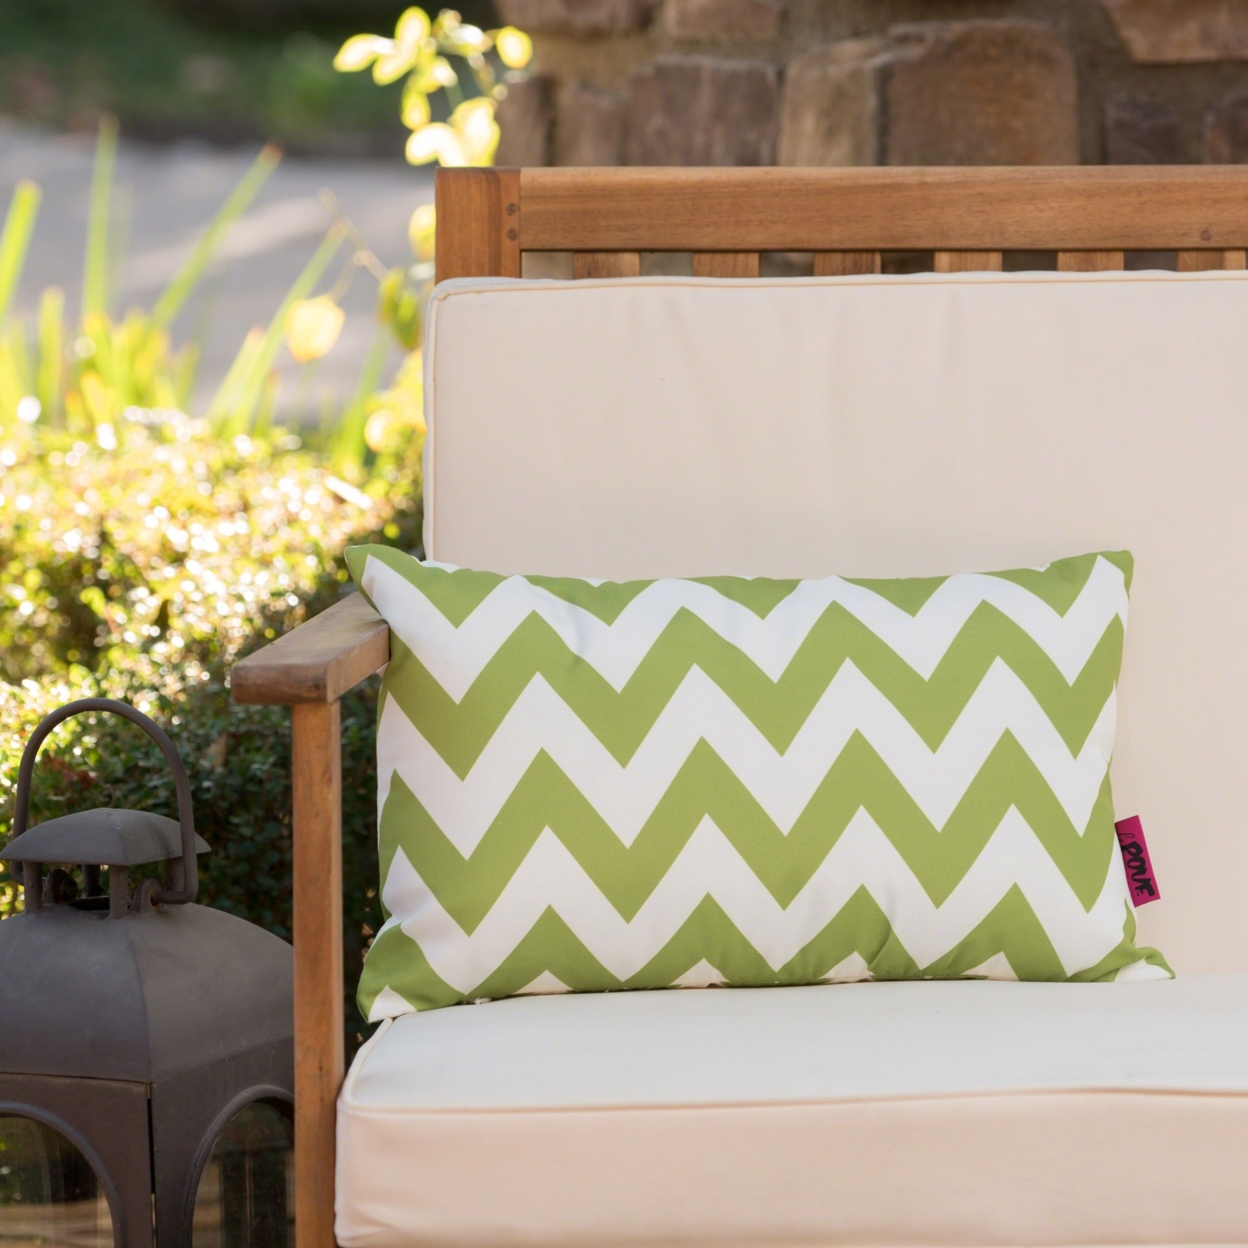 Embry Outdoor Chevron Design Water Resistant Rectangular Throw Pillow - Green/white, Set Of 2